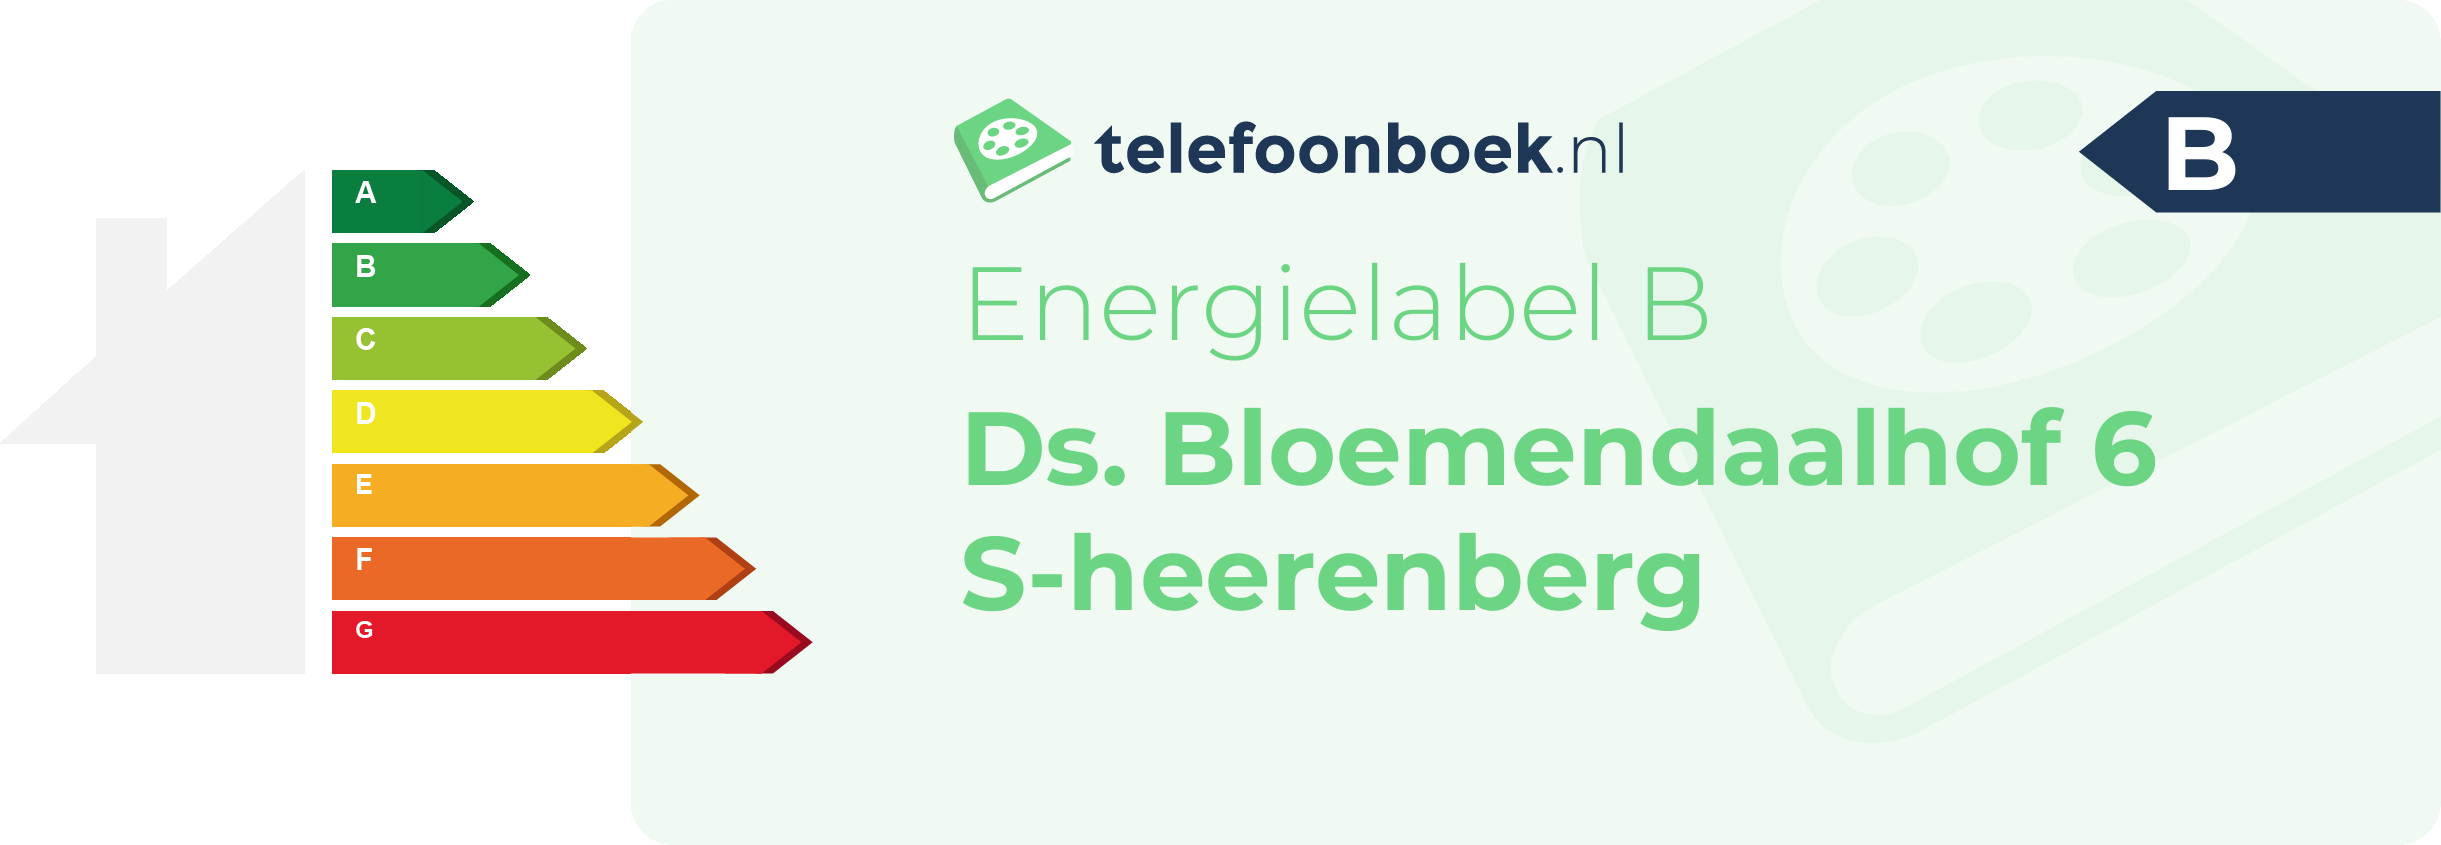 Energielabel Ds. Bloemendaalhof 6 S-Heerenberg